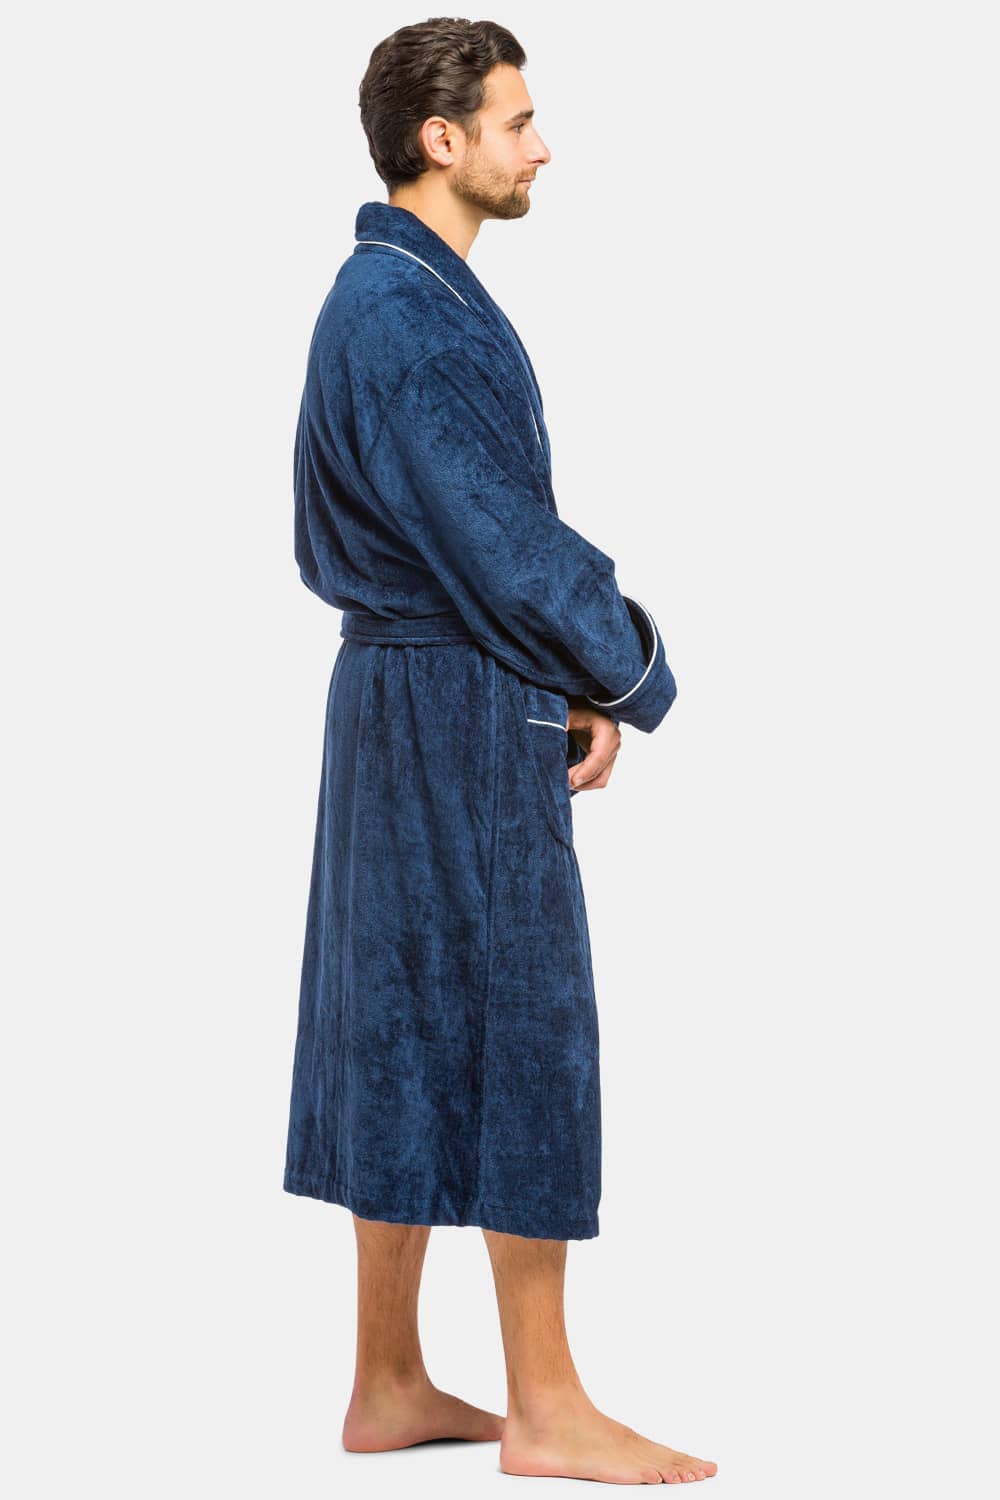 Men's Premier Turkish-Style Full Length Terry Cloth Spa Robe Mens>Sleepwear>Robe Fishers Finery 